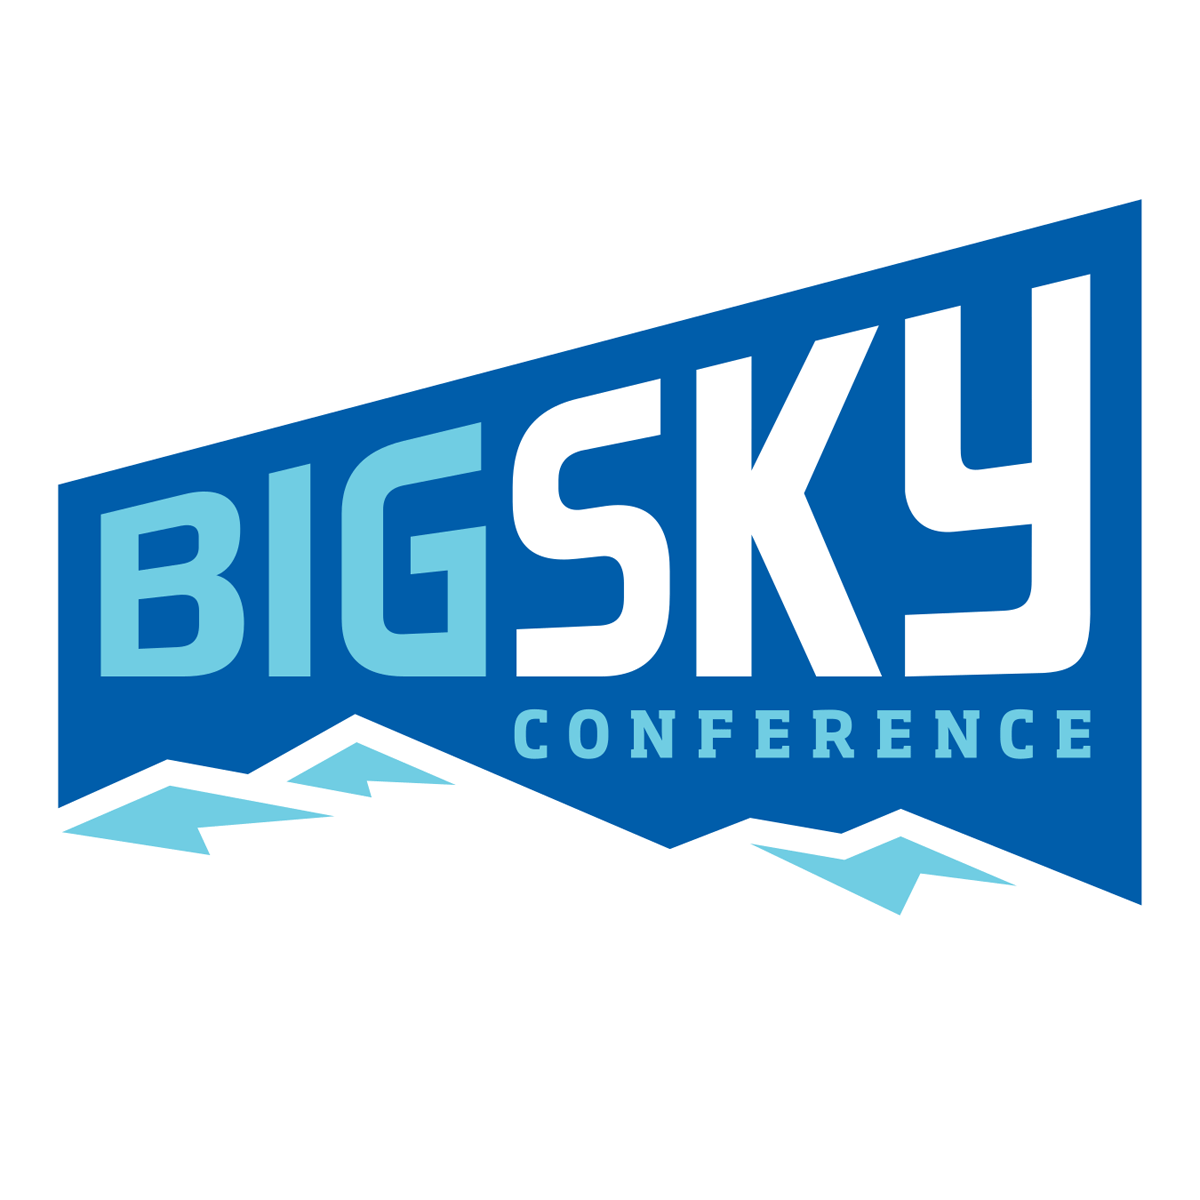 Big Sky Conference logo PNG